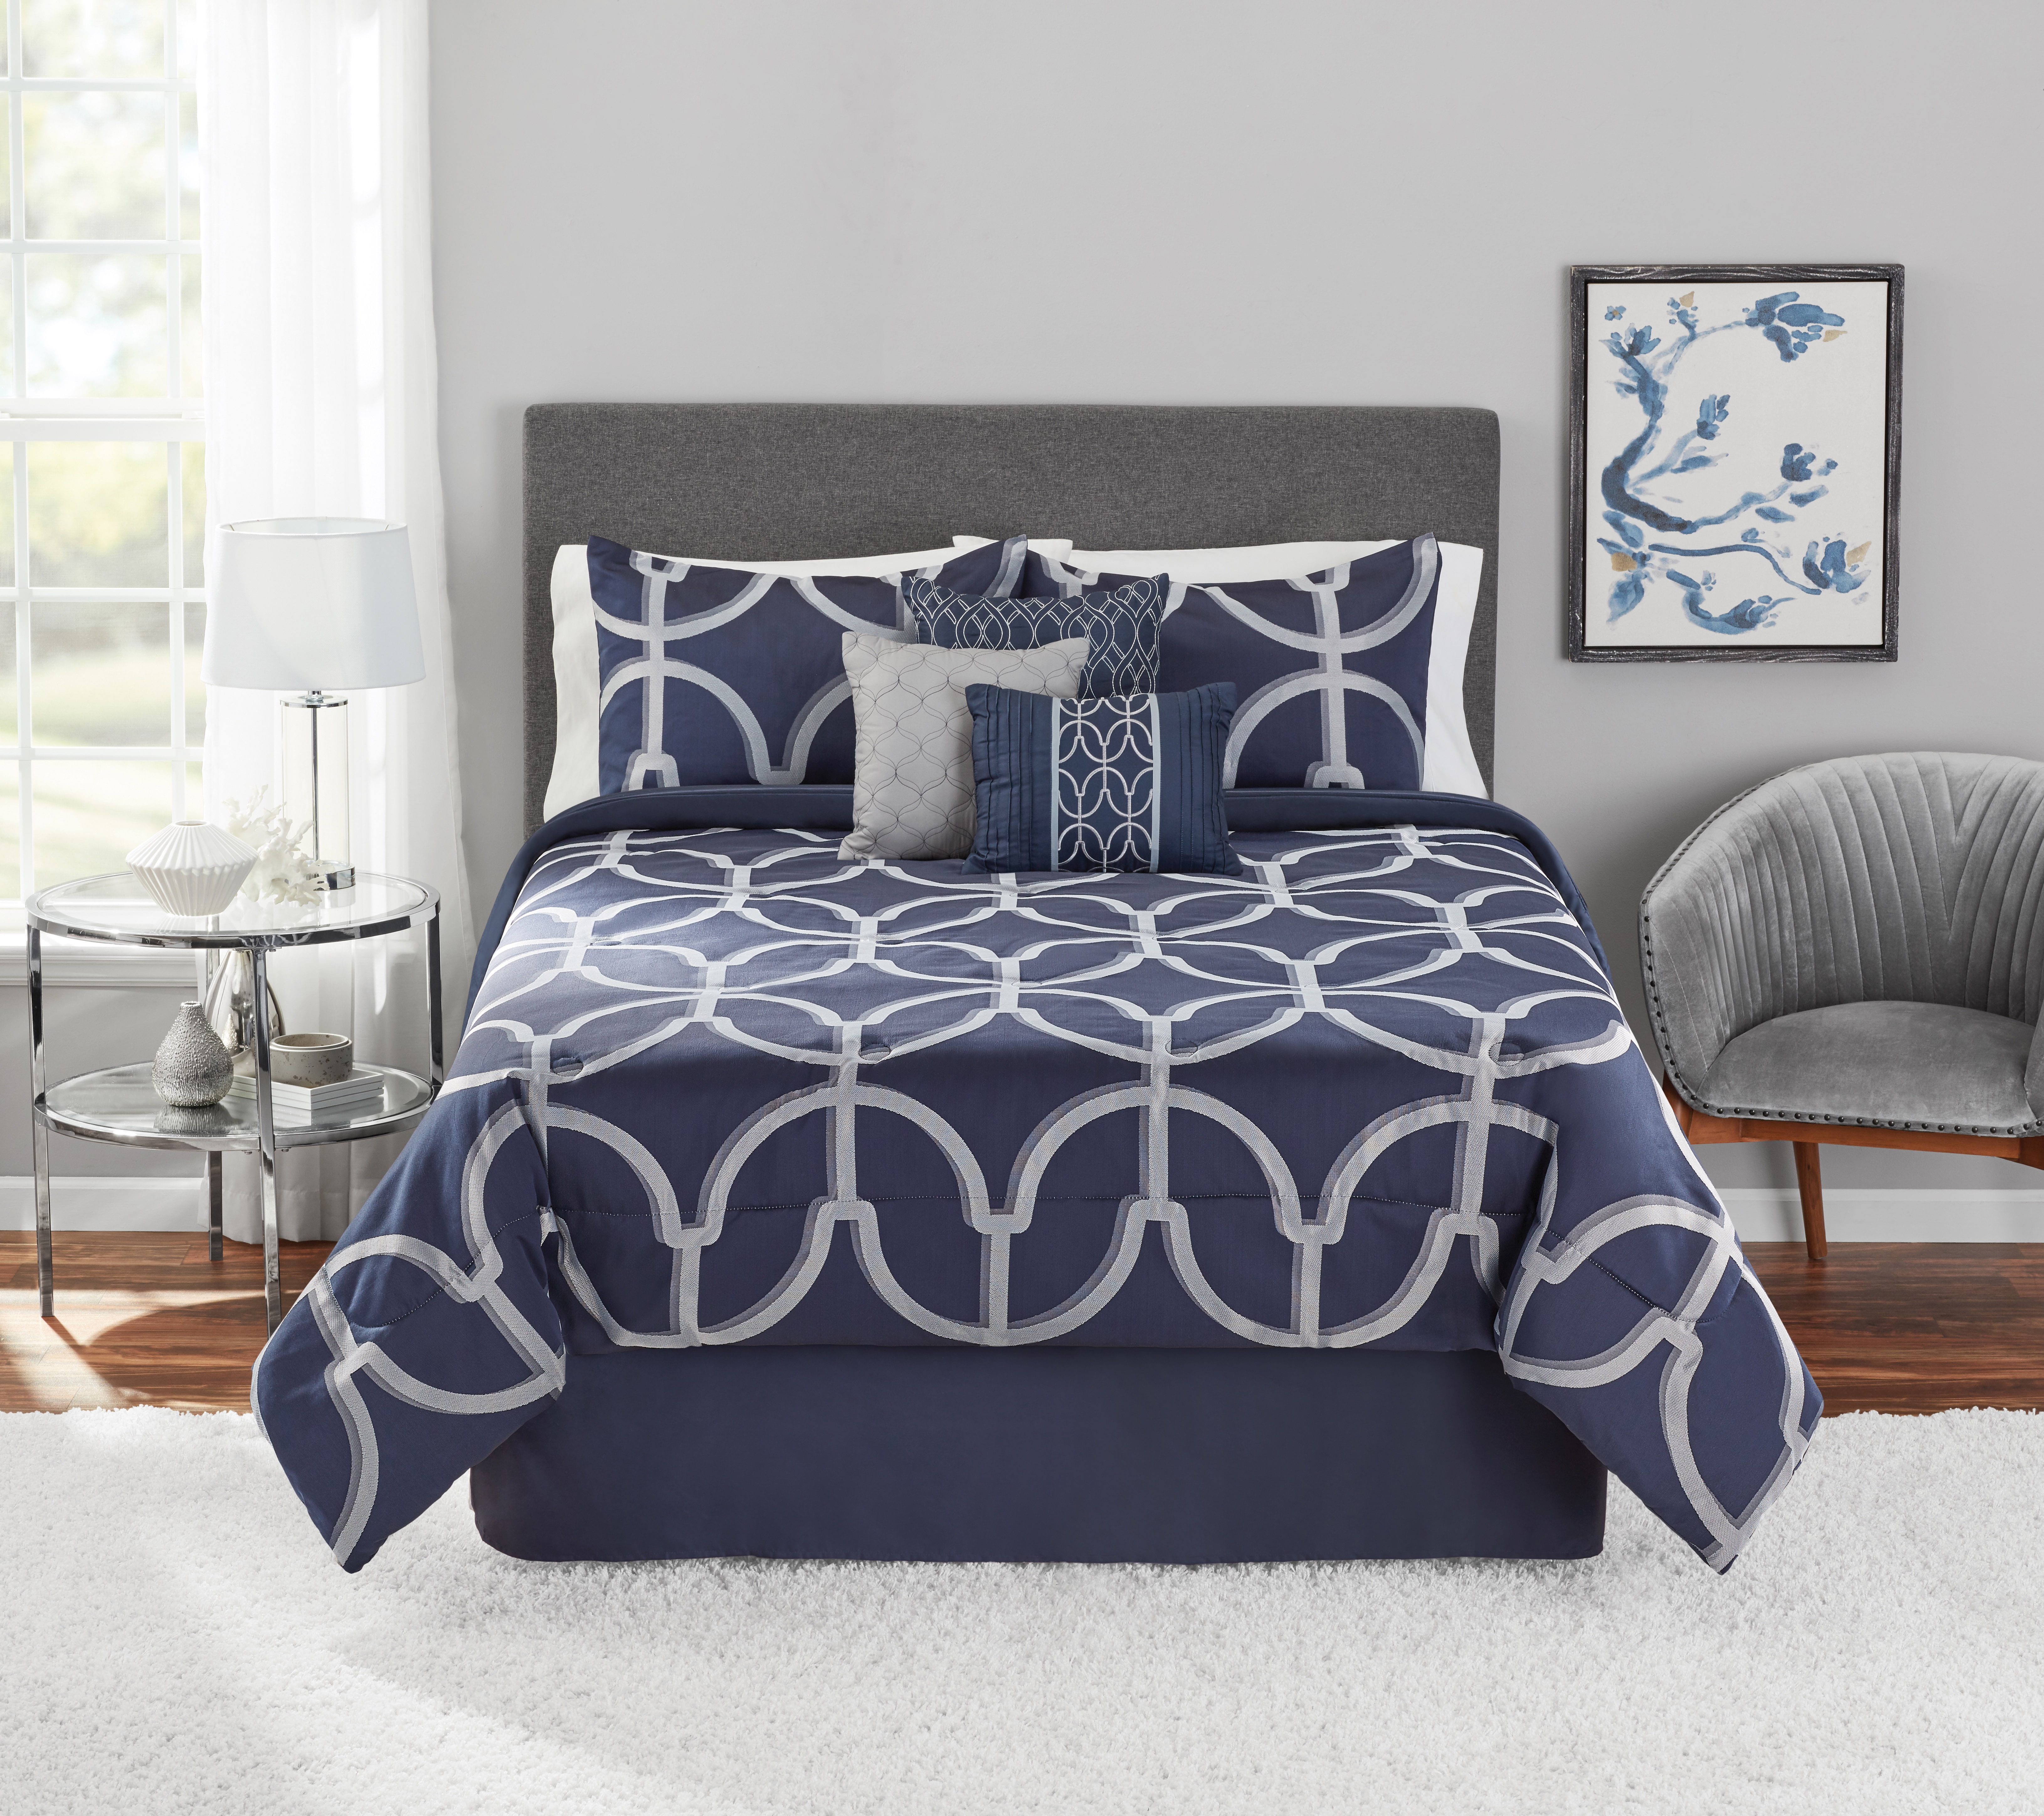 Mainstays 7-Piece Geometric Jacquard Comforter Set, Blue, Full/Queen